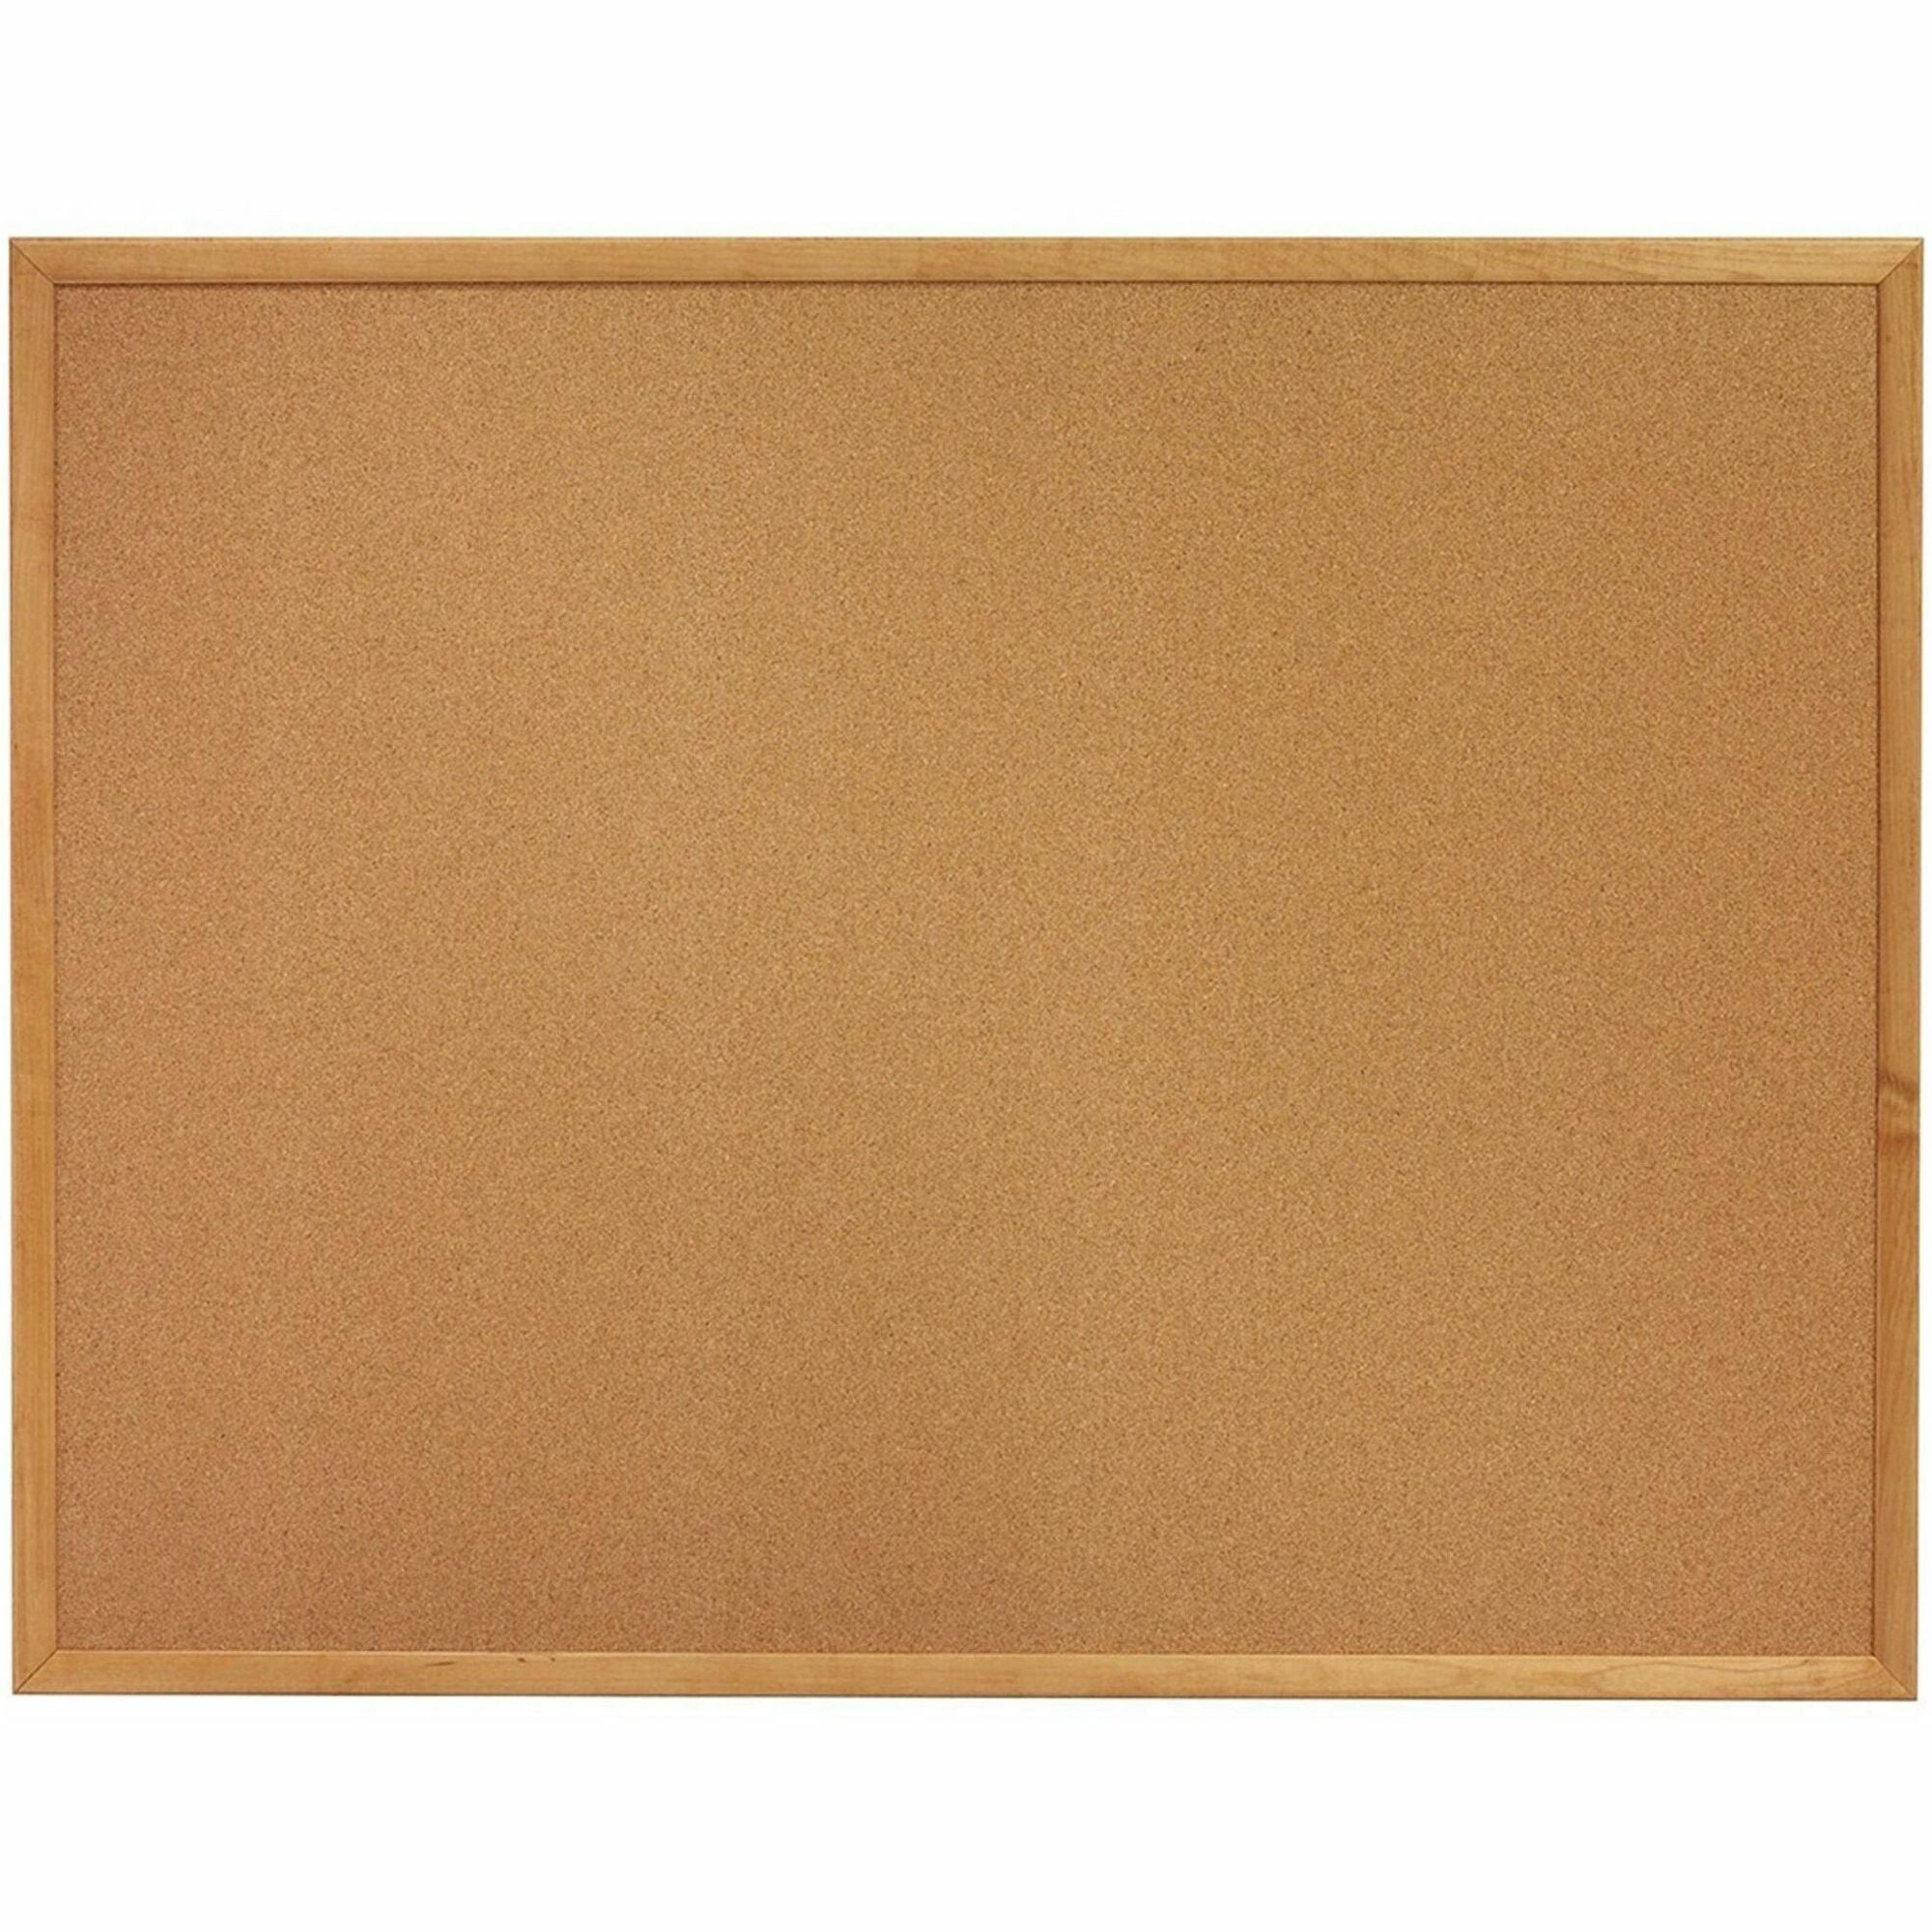 lorell-bulletin-board-18-height-x-24-width-cork-surface-long-lasting-warp-resistant-brown-oak-frame-1-each_llr19766 - 1